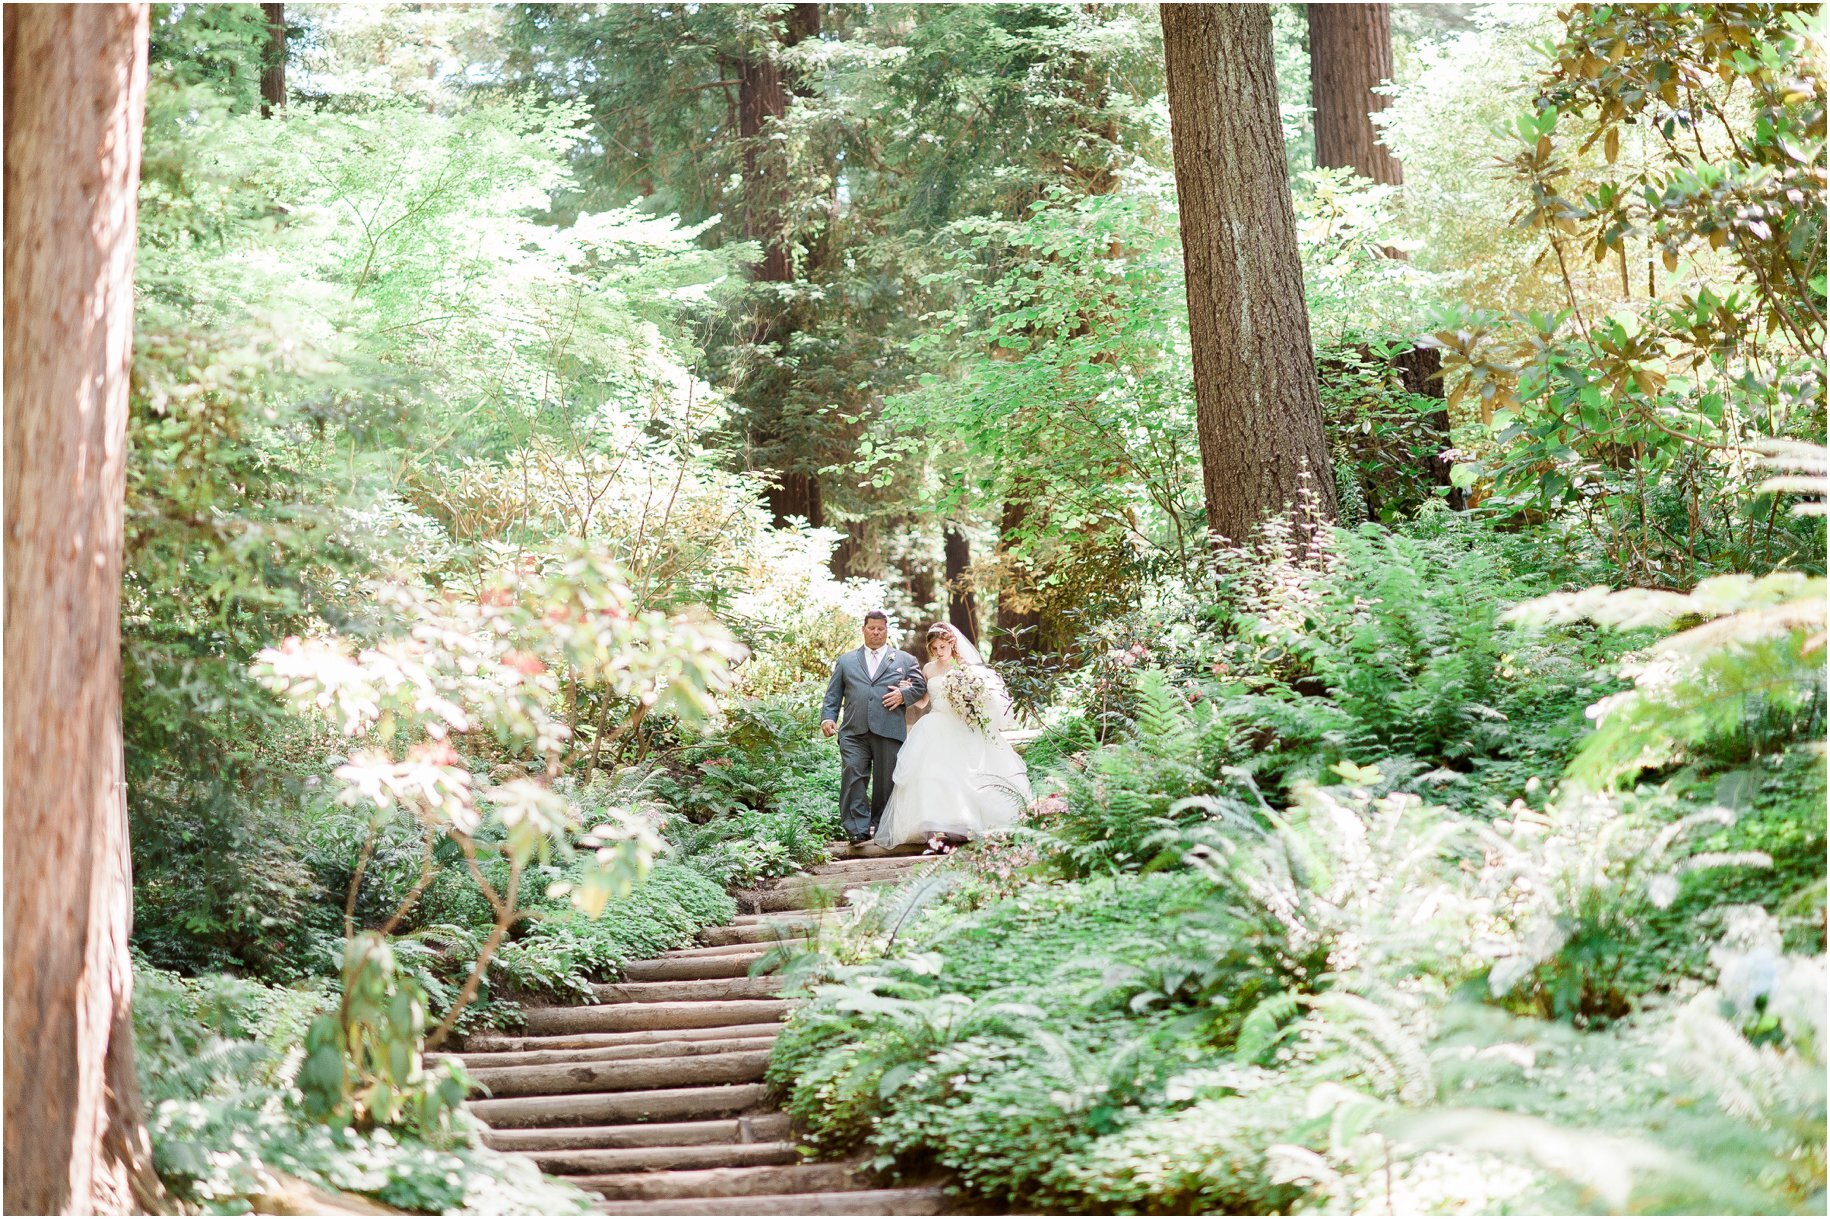 1985lukephotography.com | 1985 Luke Photography Bay Area San Francisco Northern California Wedding Photographers | Nestldown | Los Gatos Weddings 38.jpg